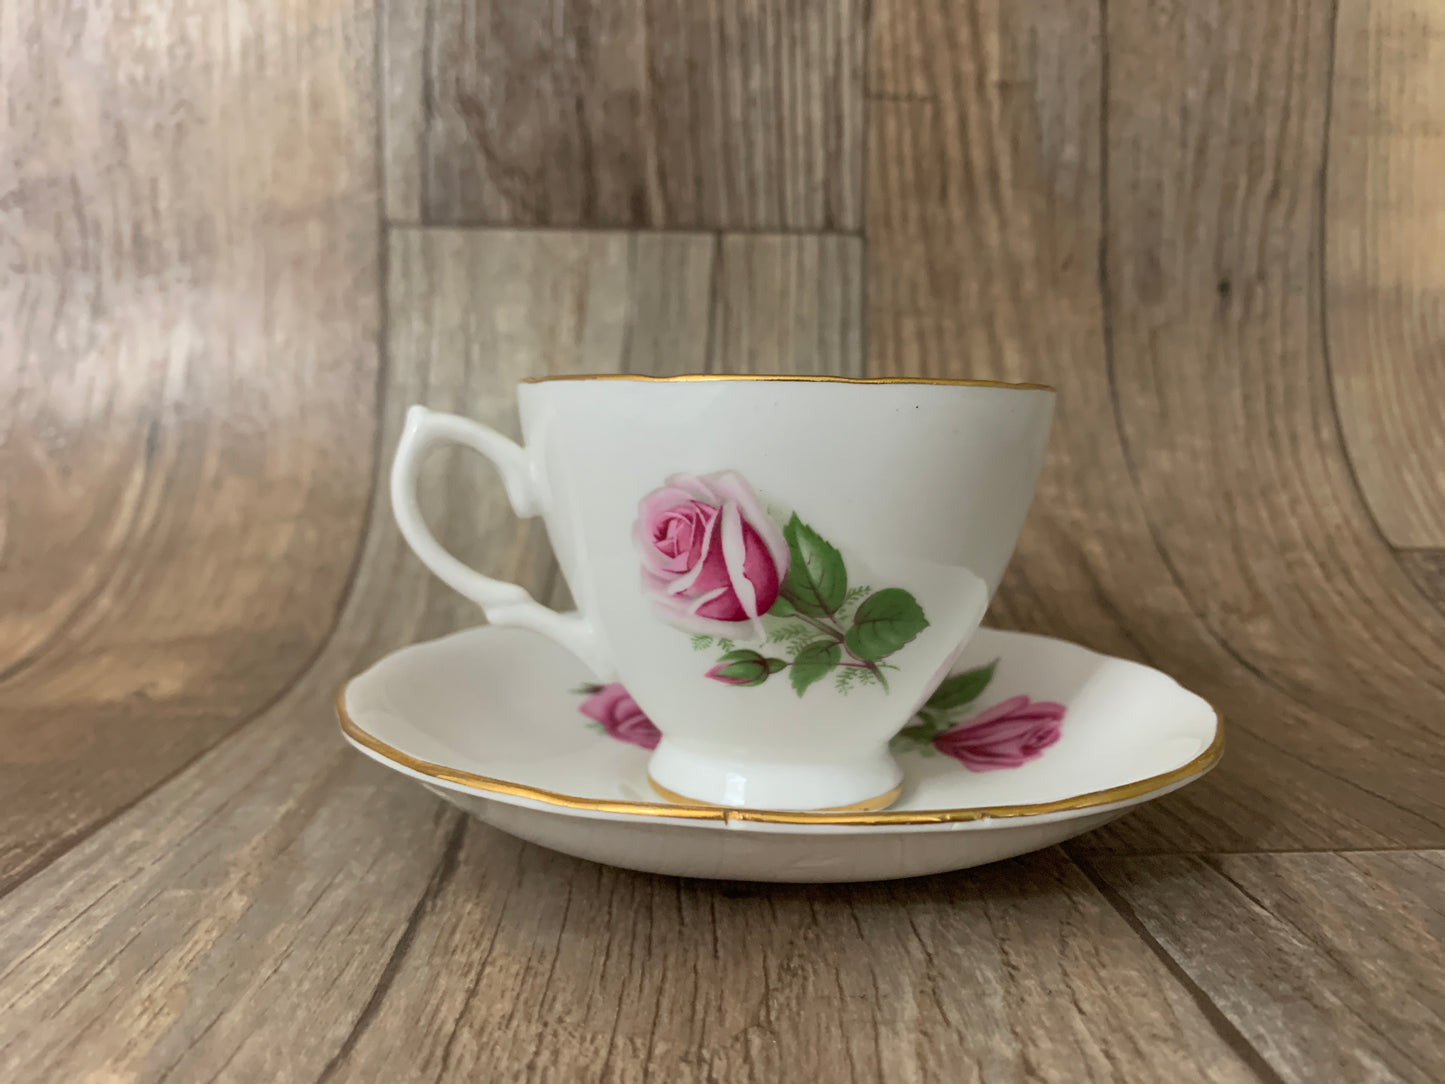 Vintage Teacup with Soft Pink Roses Vintage Pink Floral Tea Cup and Saucer